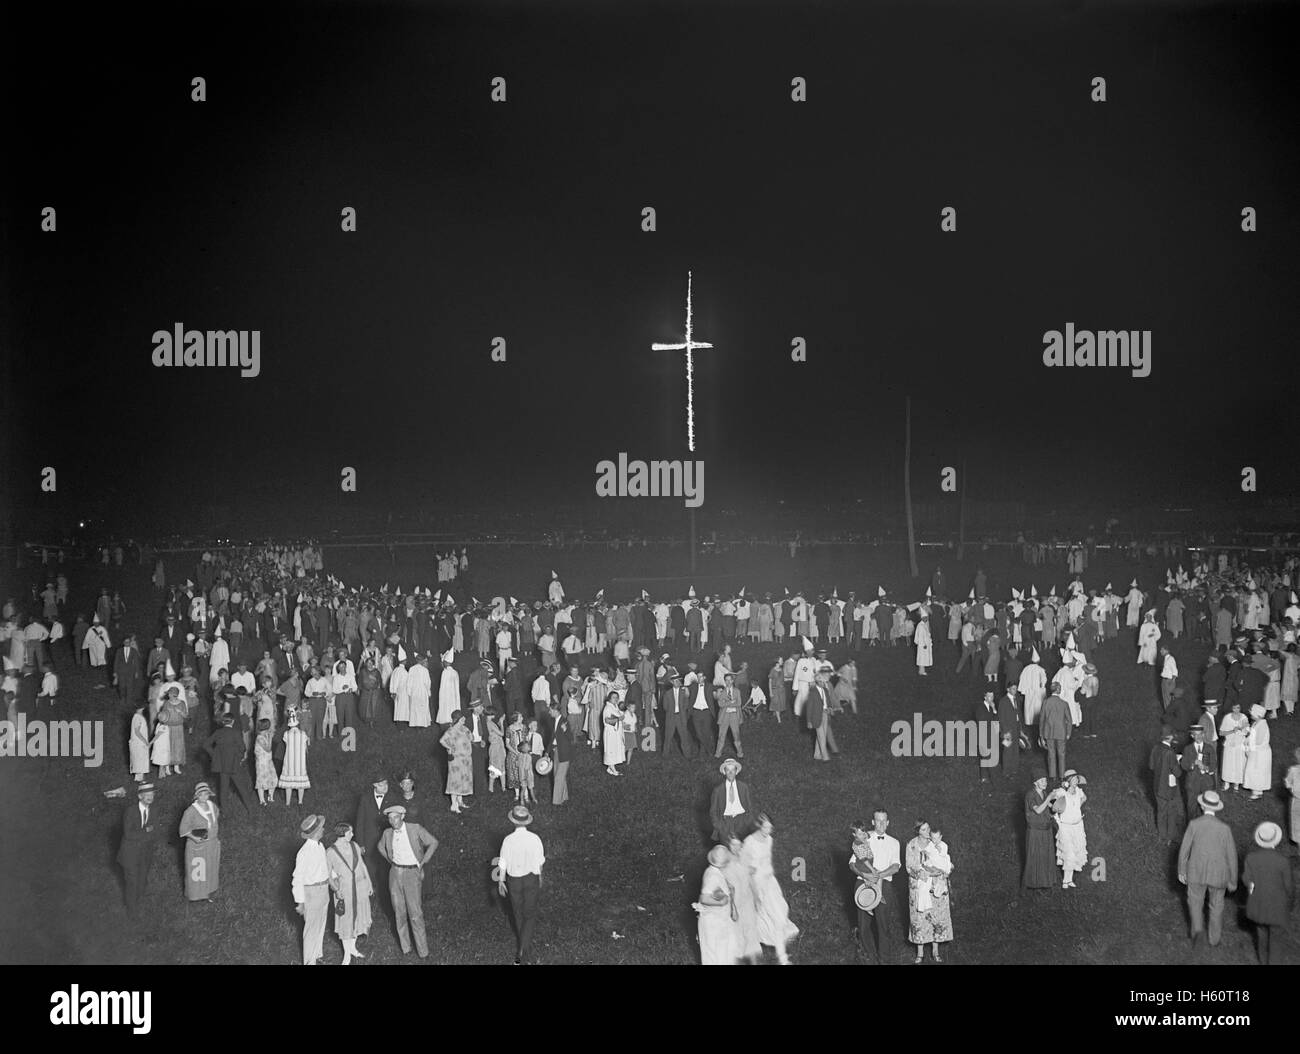 Burning 80-foot Cross at Ku Klux Klan Demonstration, Washington DC, USA, National Photo Company, August 1925 Stock Photo